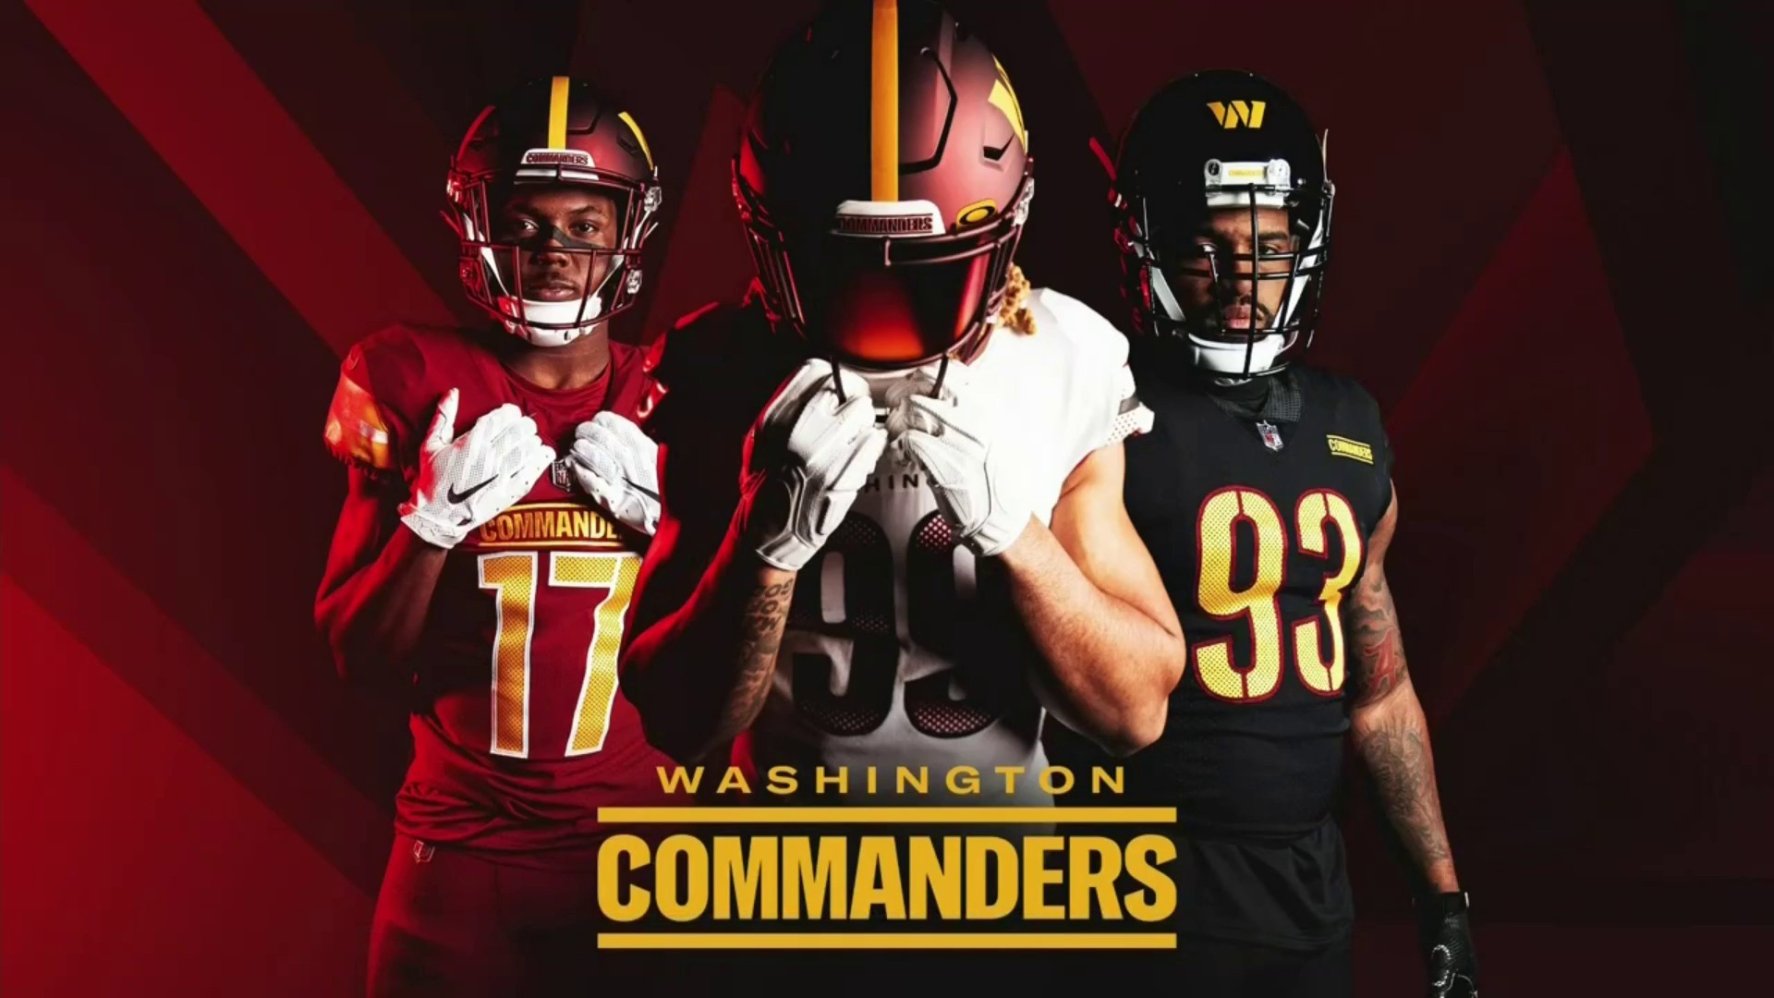 Photos See the Washington Commanders’ New Uniforms, Logo NBC4 Washington